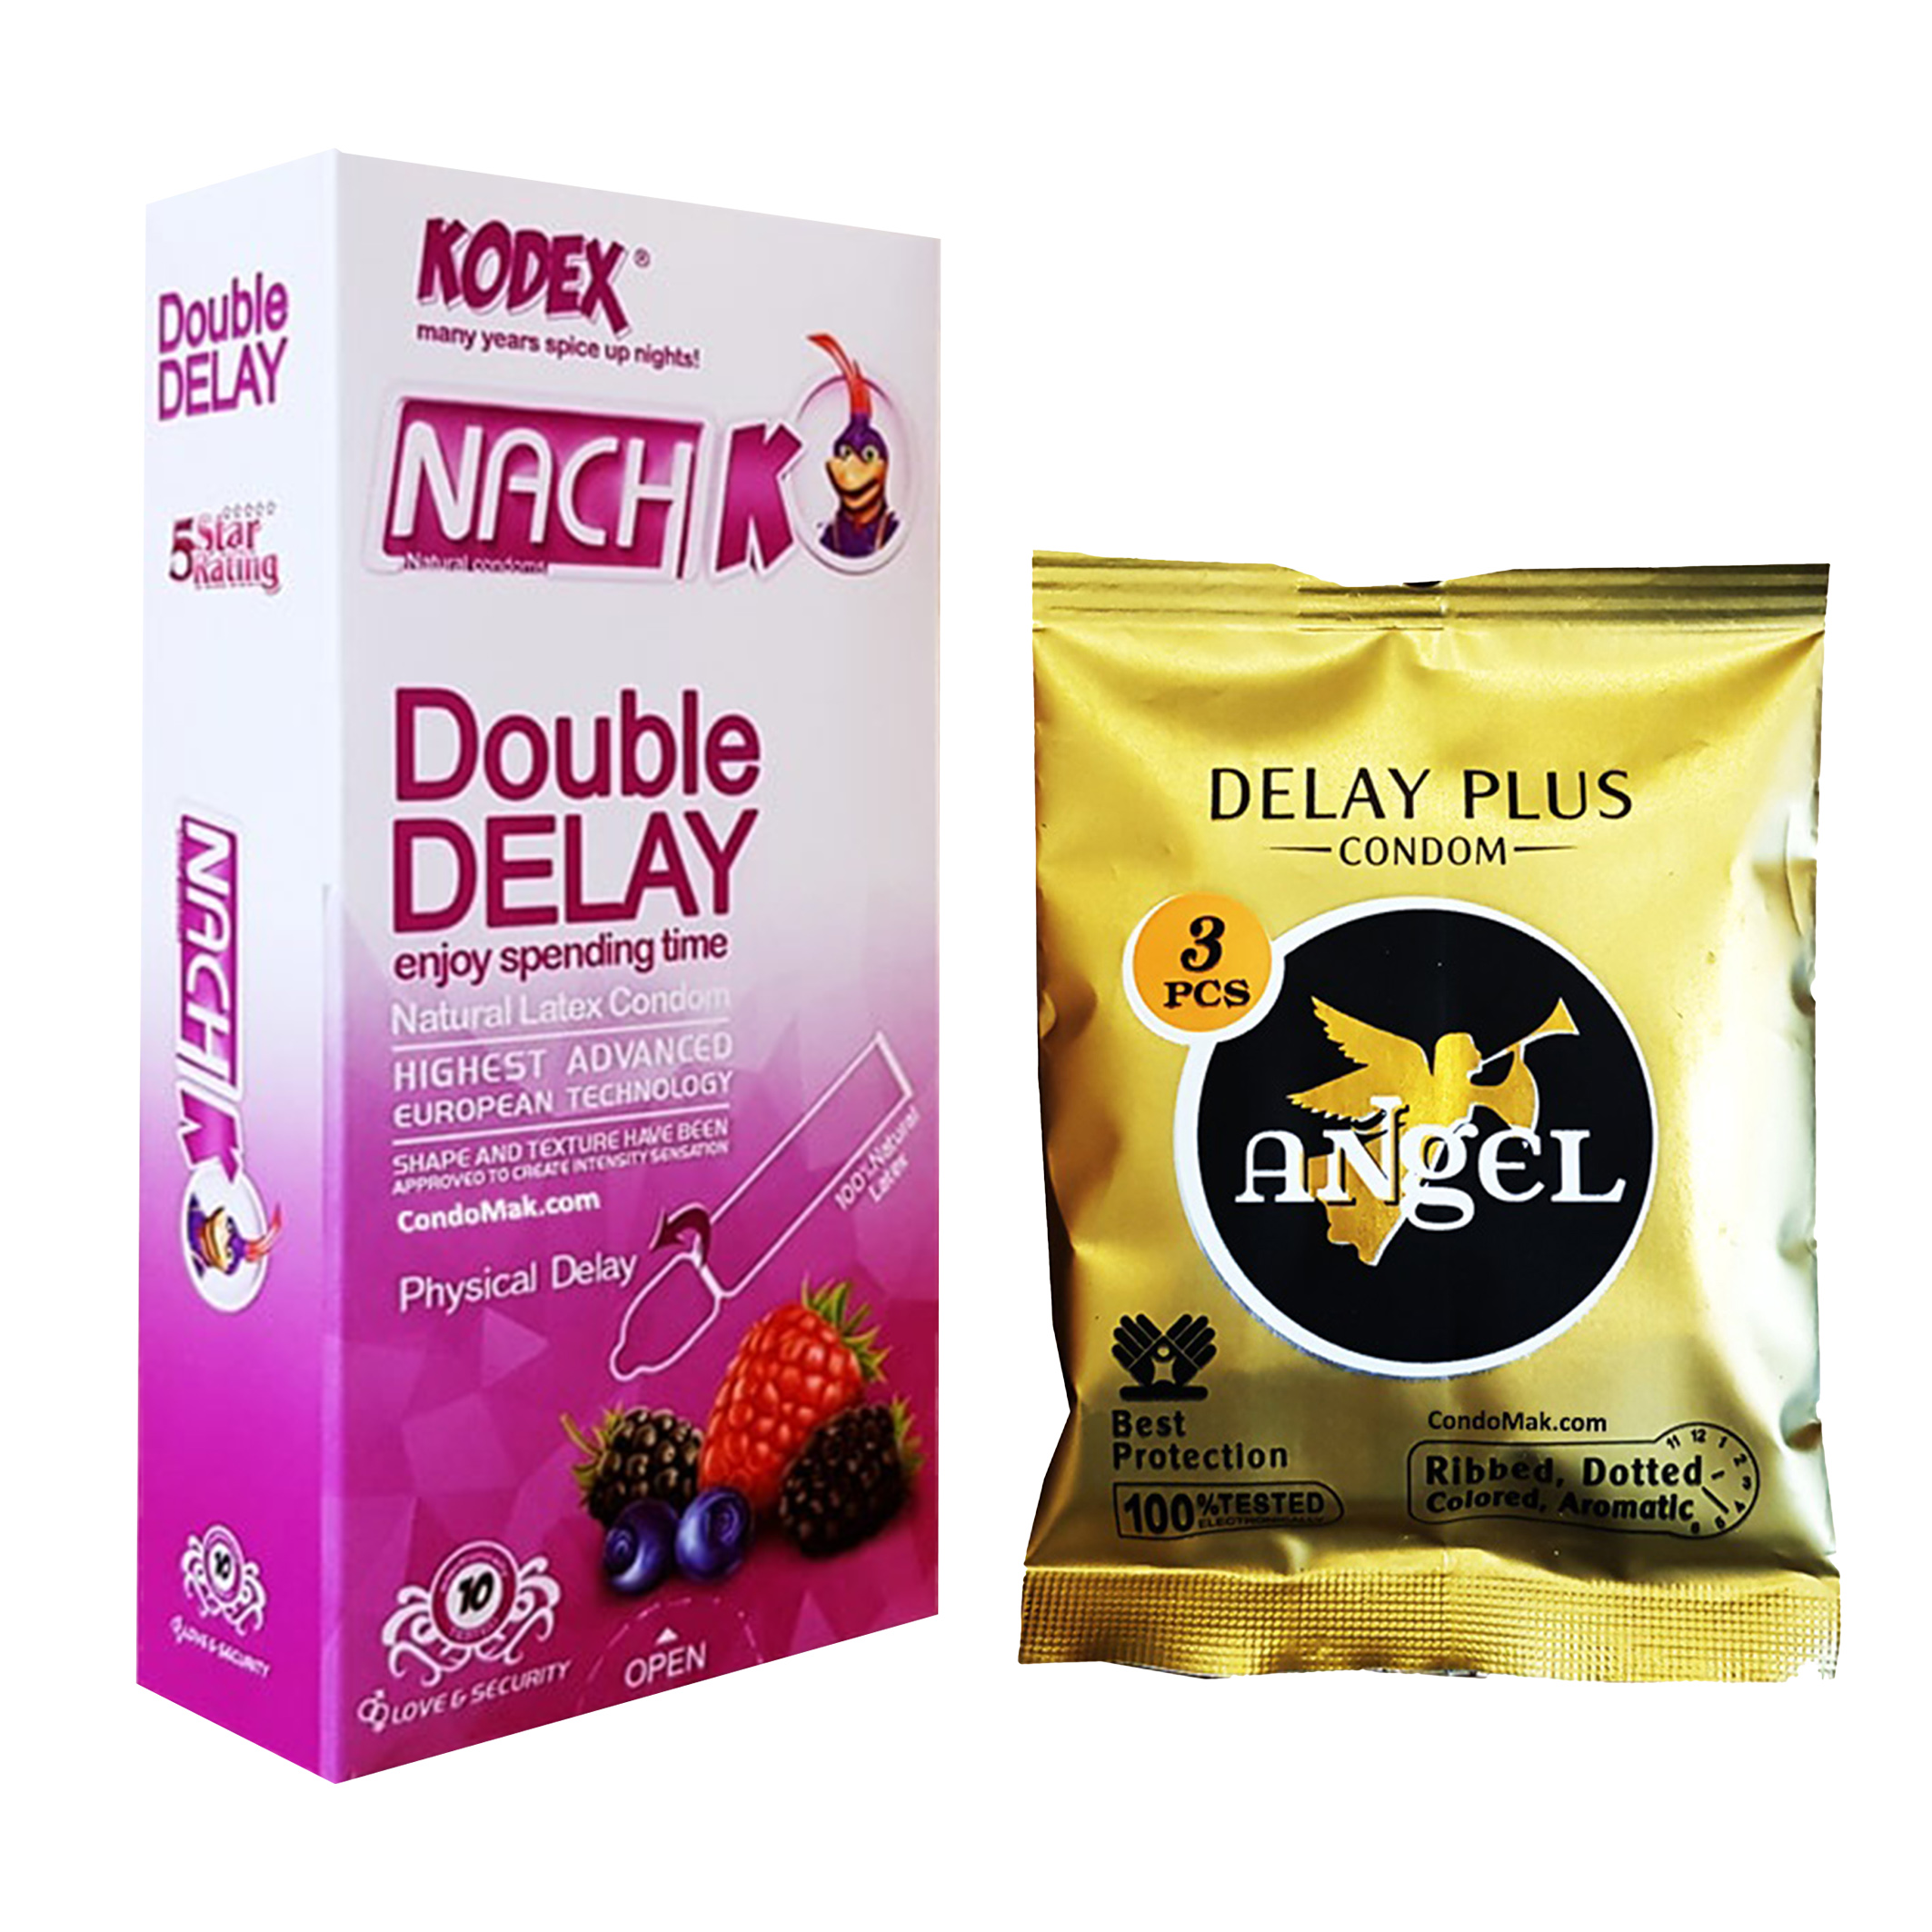 کاندوم ناچ کدکس مدل DOUBLE DELAY بسته 12عددی به همراه کاندوم انجل مدل DELAY PLUS بسته 3 عددی